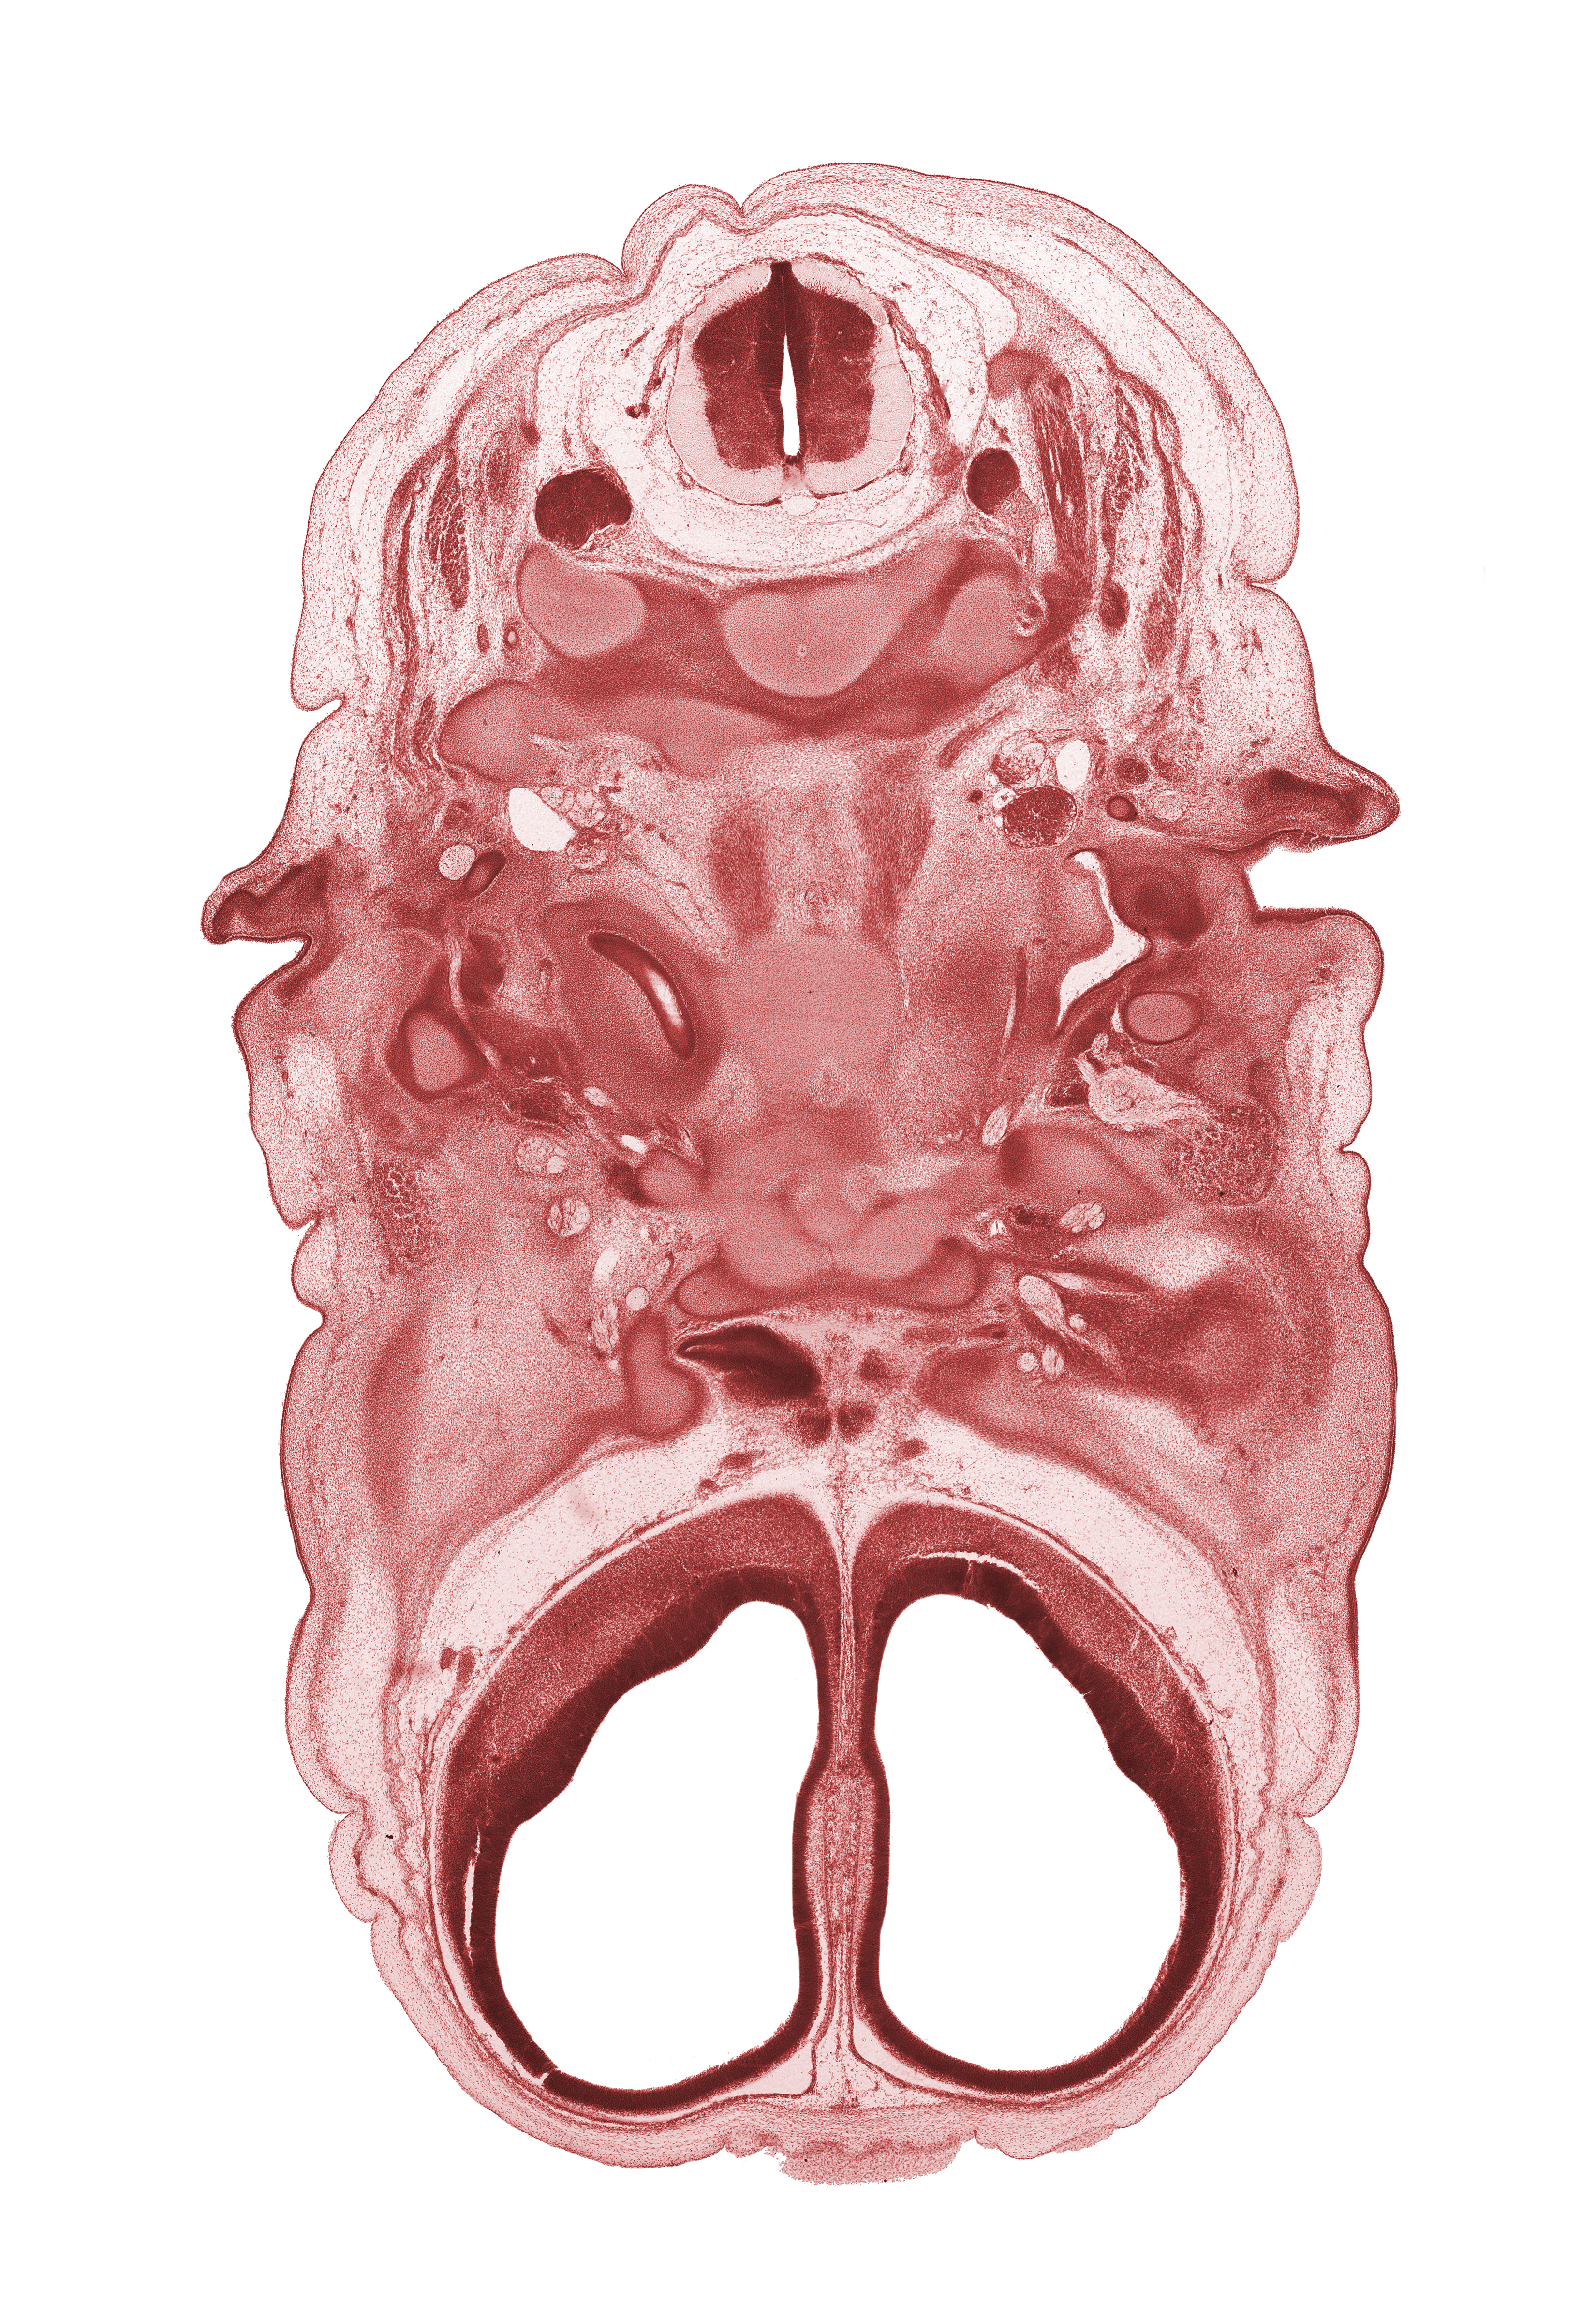 C-2 spinal ganglion, C-2 spinal nerve, artifact fracture(s), artifact separation(s), auricle, body of sphenoid, cephalic edge of diencephalon, falx cerebri region, inferior ganglion of glossopharyngeal nerve (CN IX), longus capitis muscle, mandibular nerve (CN V₃), maxillary nerve (CN V₂), ophthalmic nerve (CN V₁), optic nerve (CN II), pharyngeal arch 1 cartilage (Meckel), sympathetic trunk, venous plexus(es)